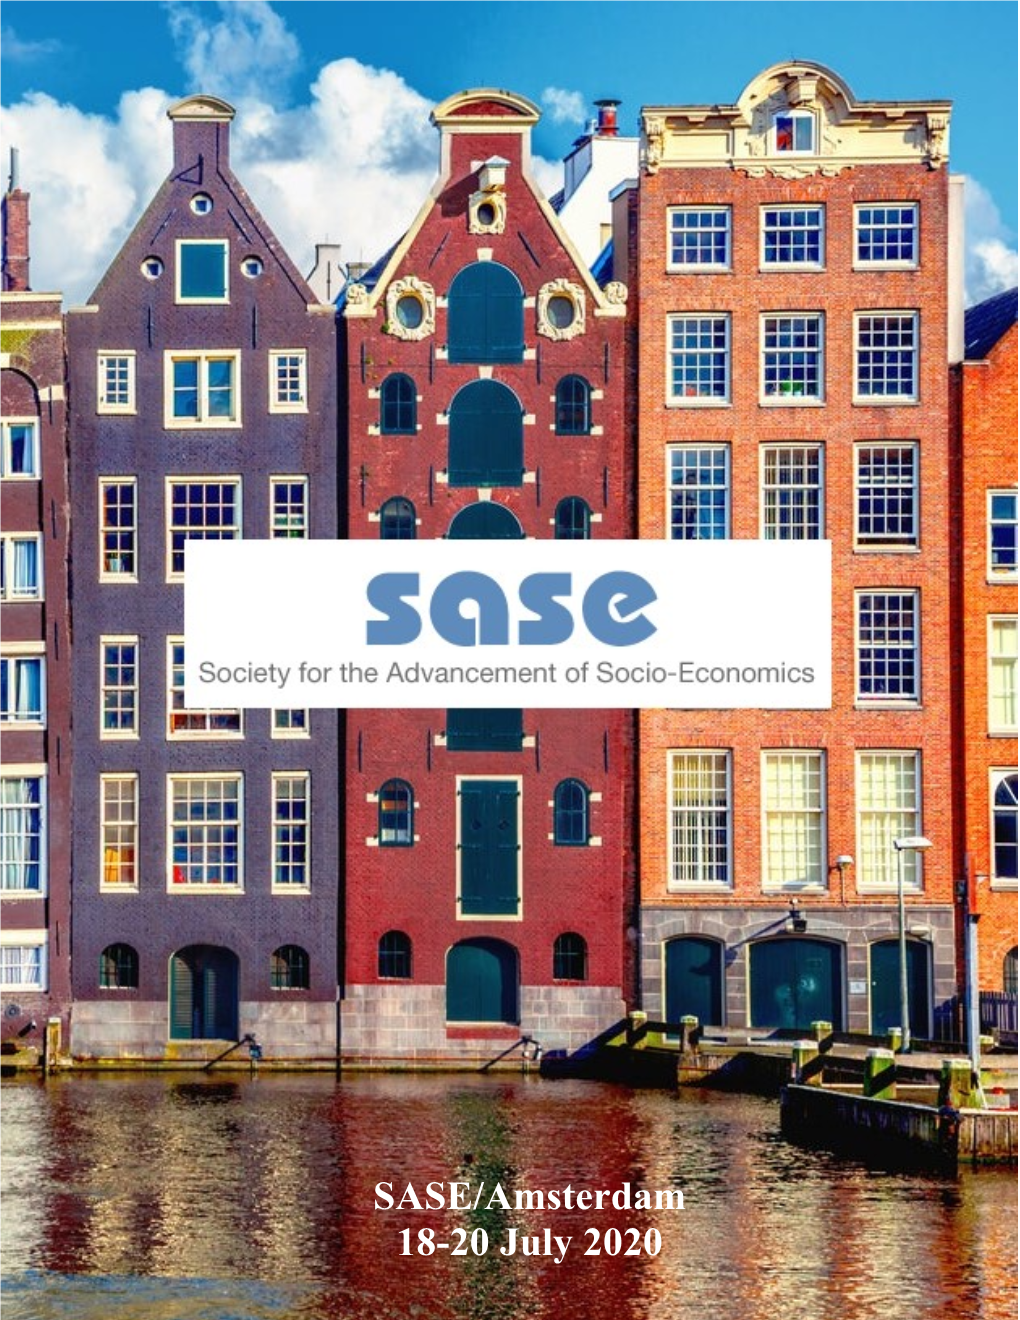 SASE/Amsterdam 18-20 July 2020